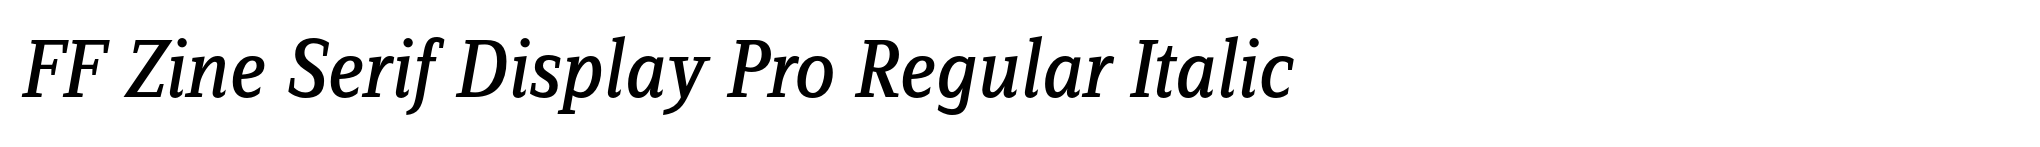 FF Zine Serif Display Pro Regular Italic image